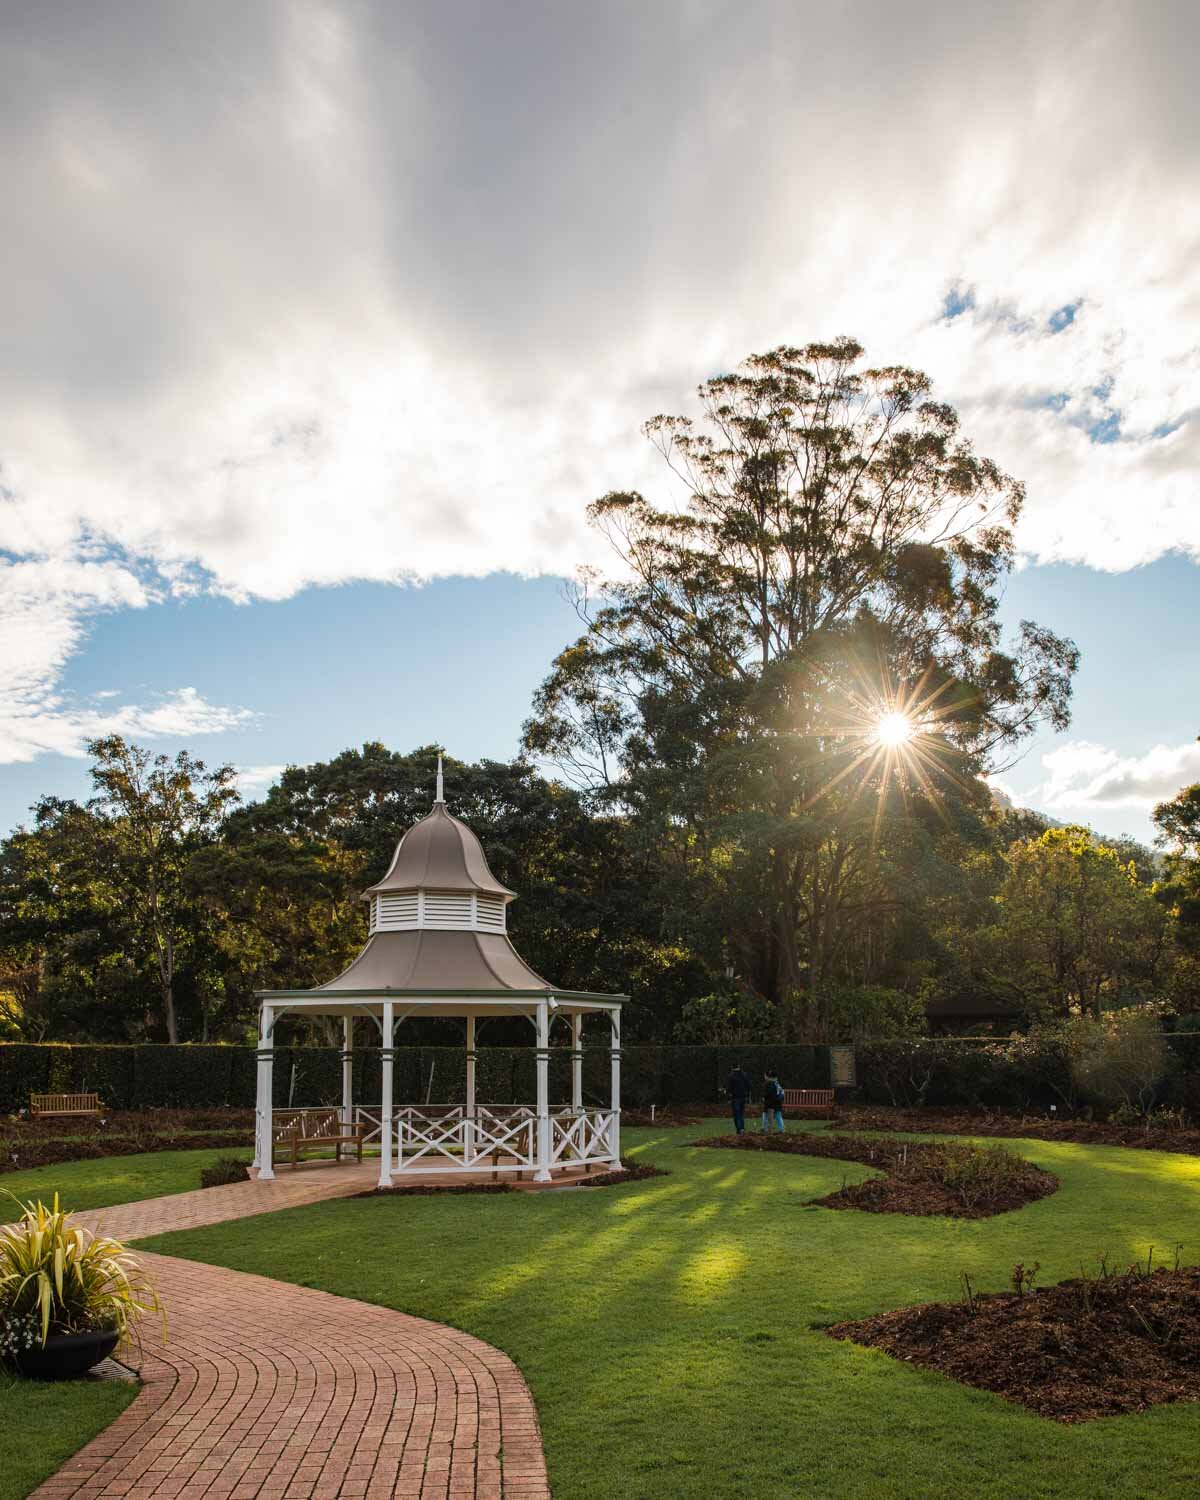 The Botanic Gardens in Wollongong